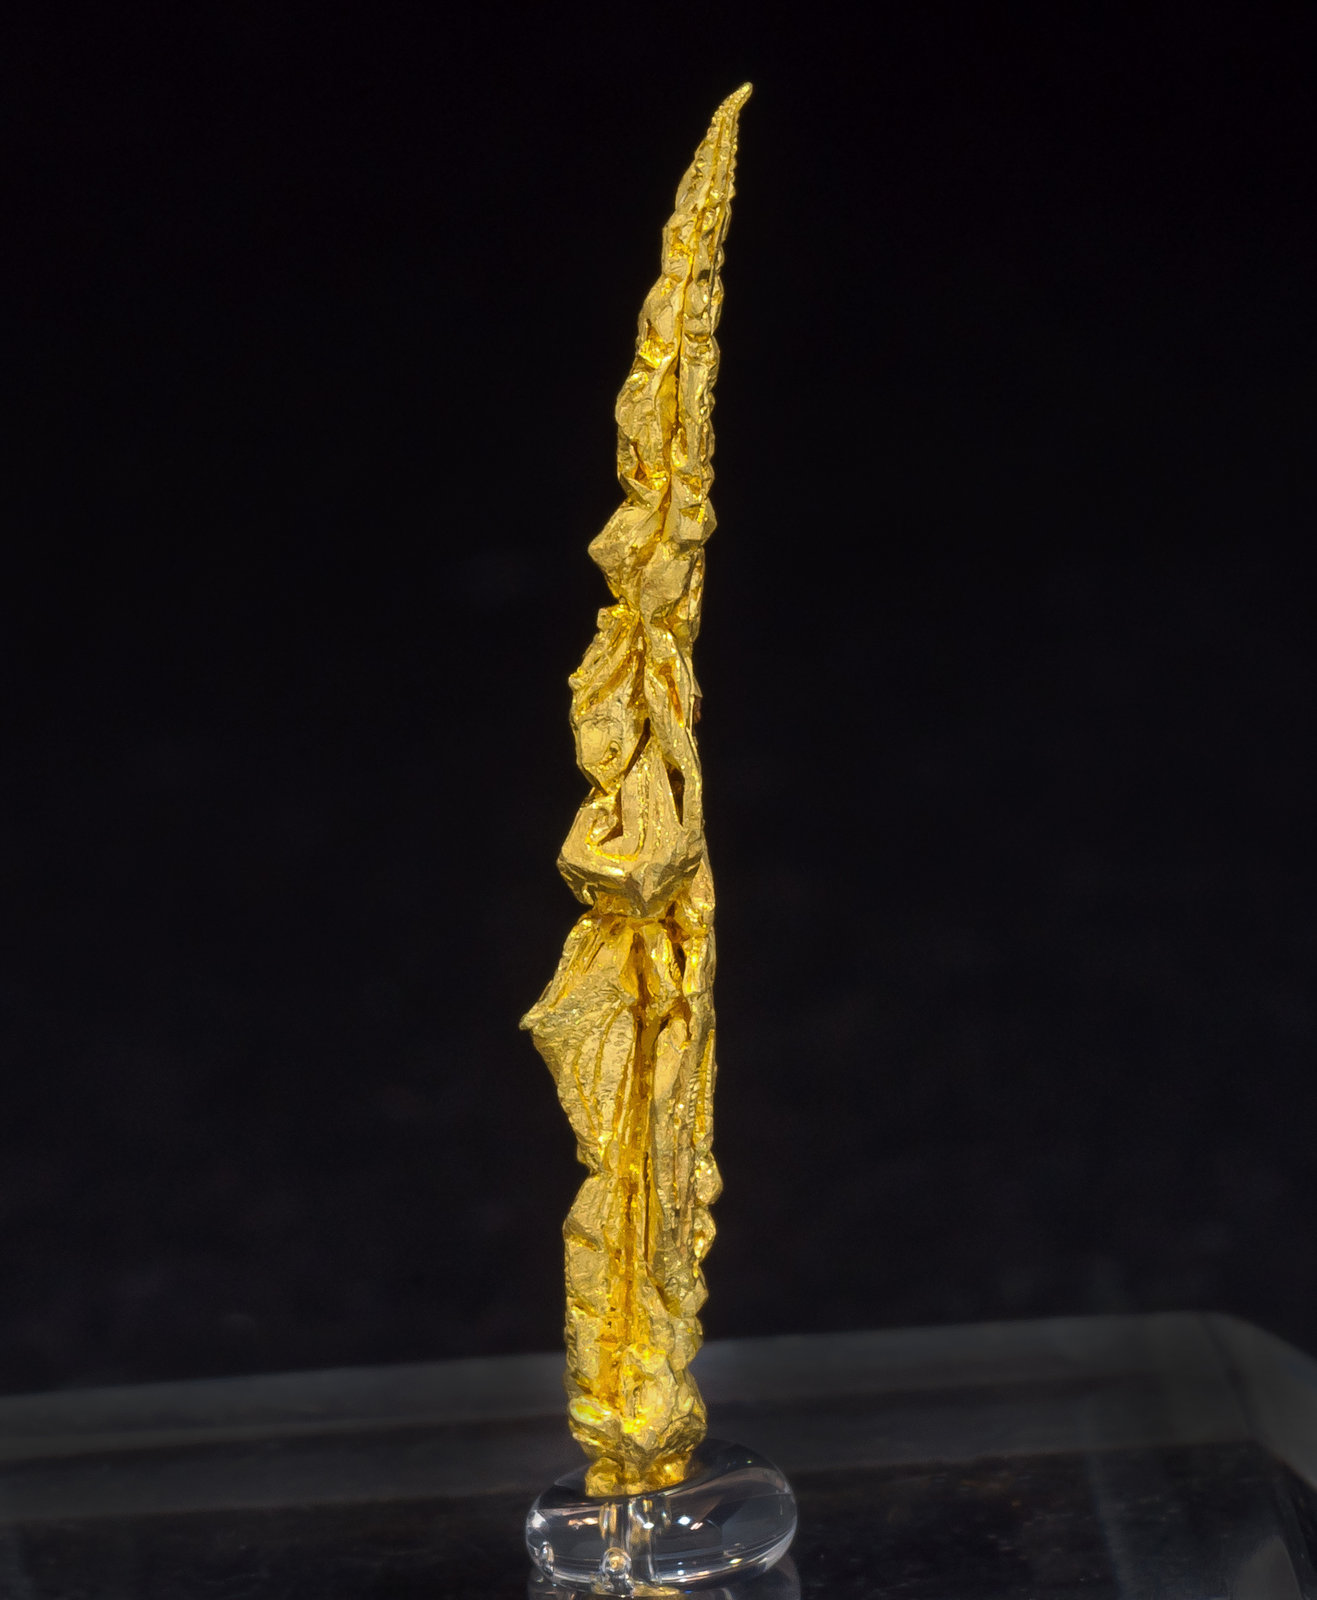 specimens/s_imagesAM4/Gold-MB16AM4s.jpg